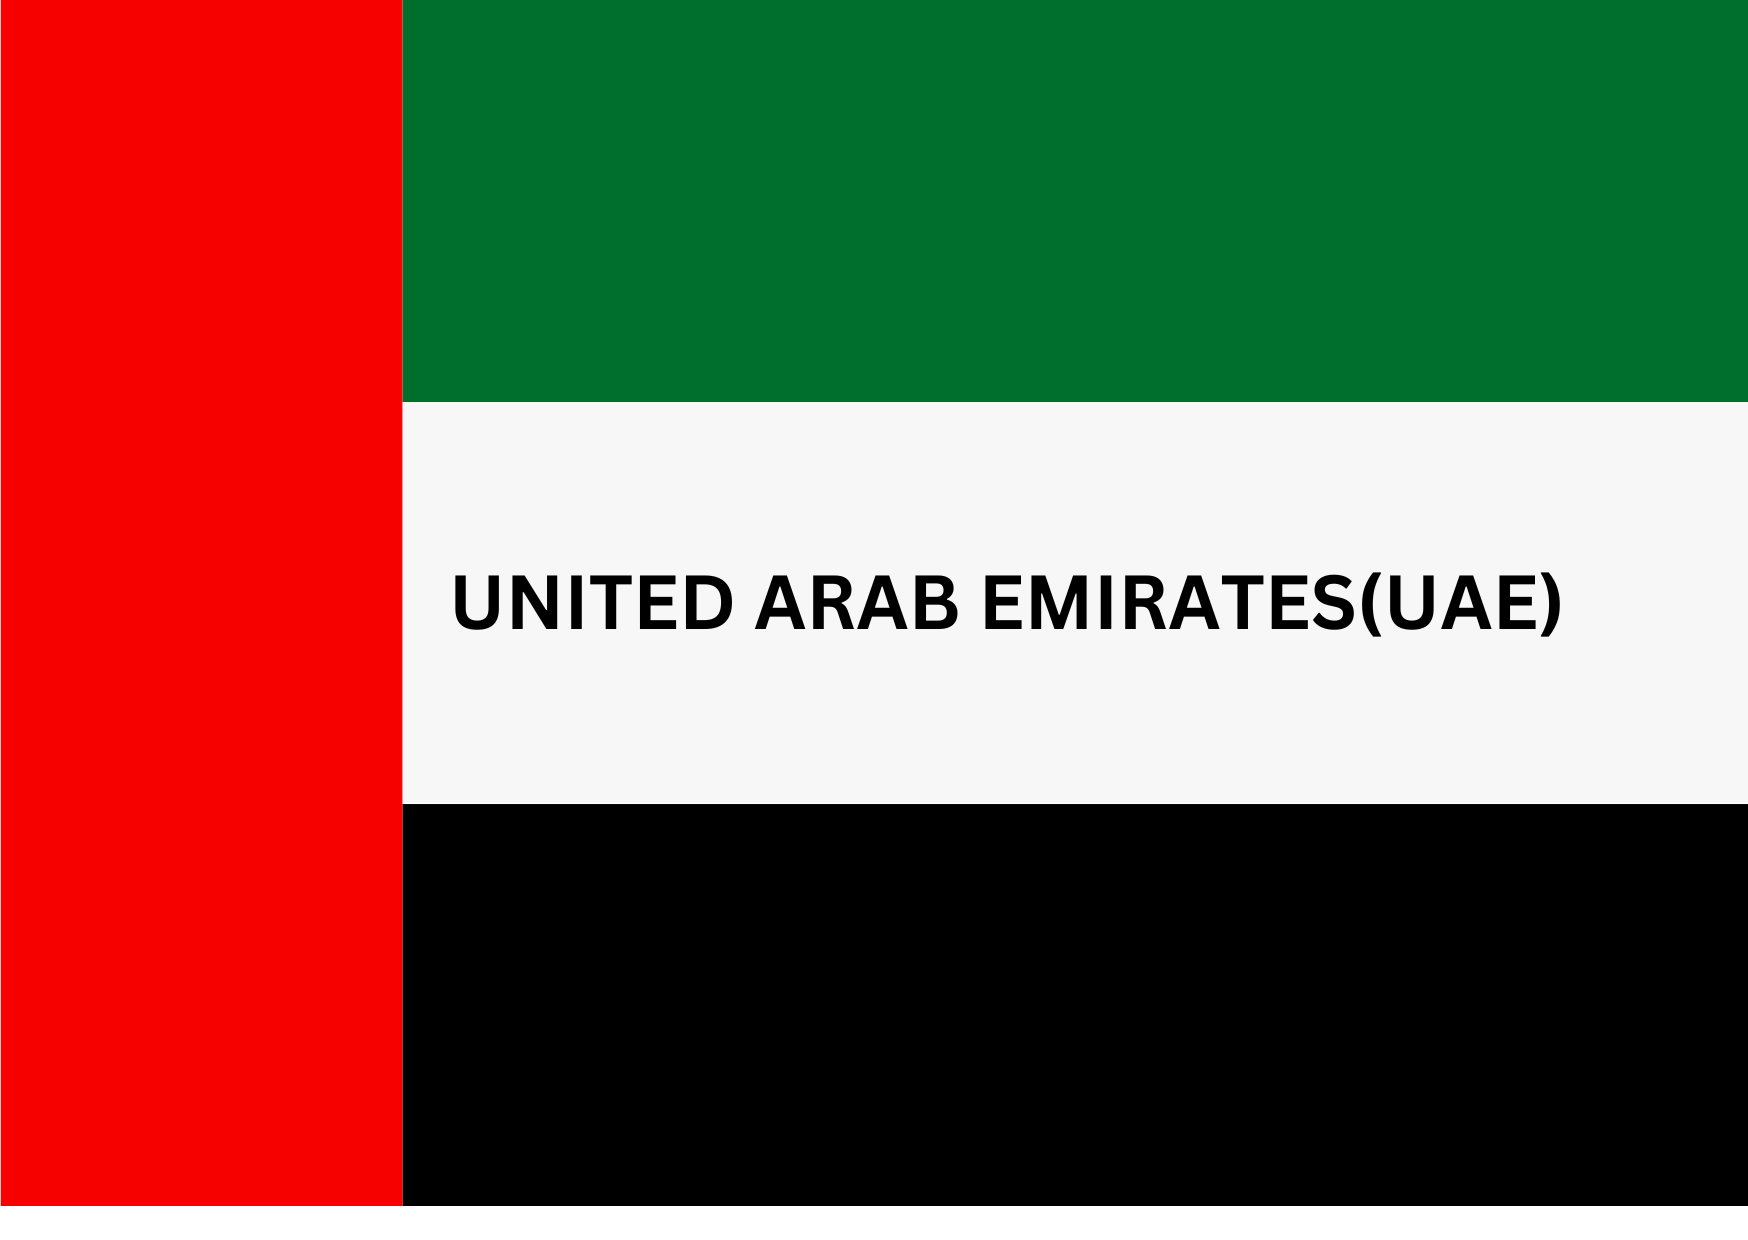 UNITED ARAB EMIRATES (UAE)